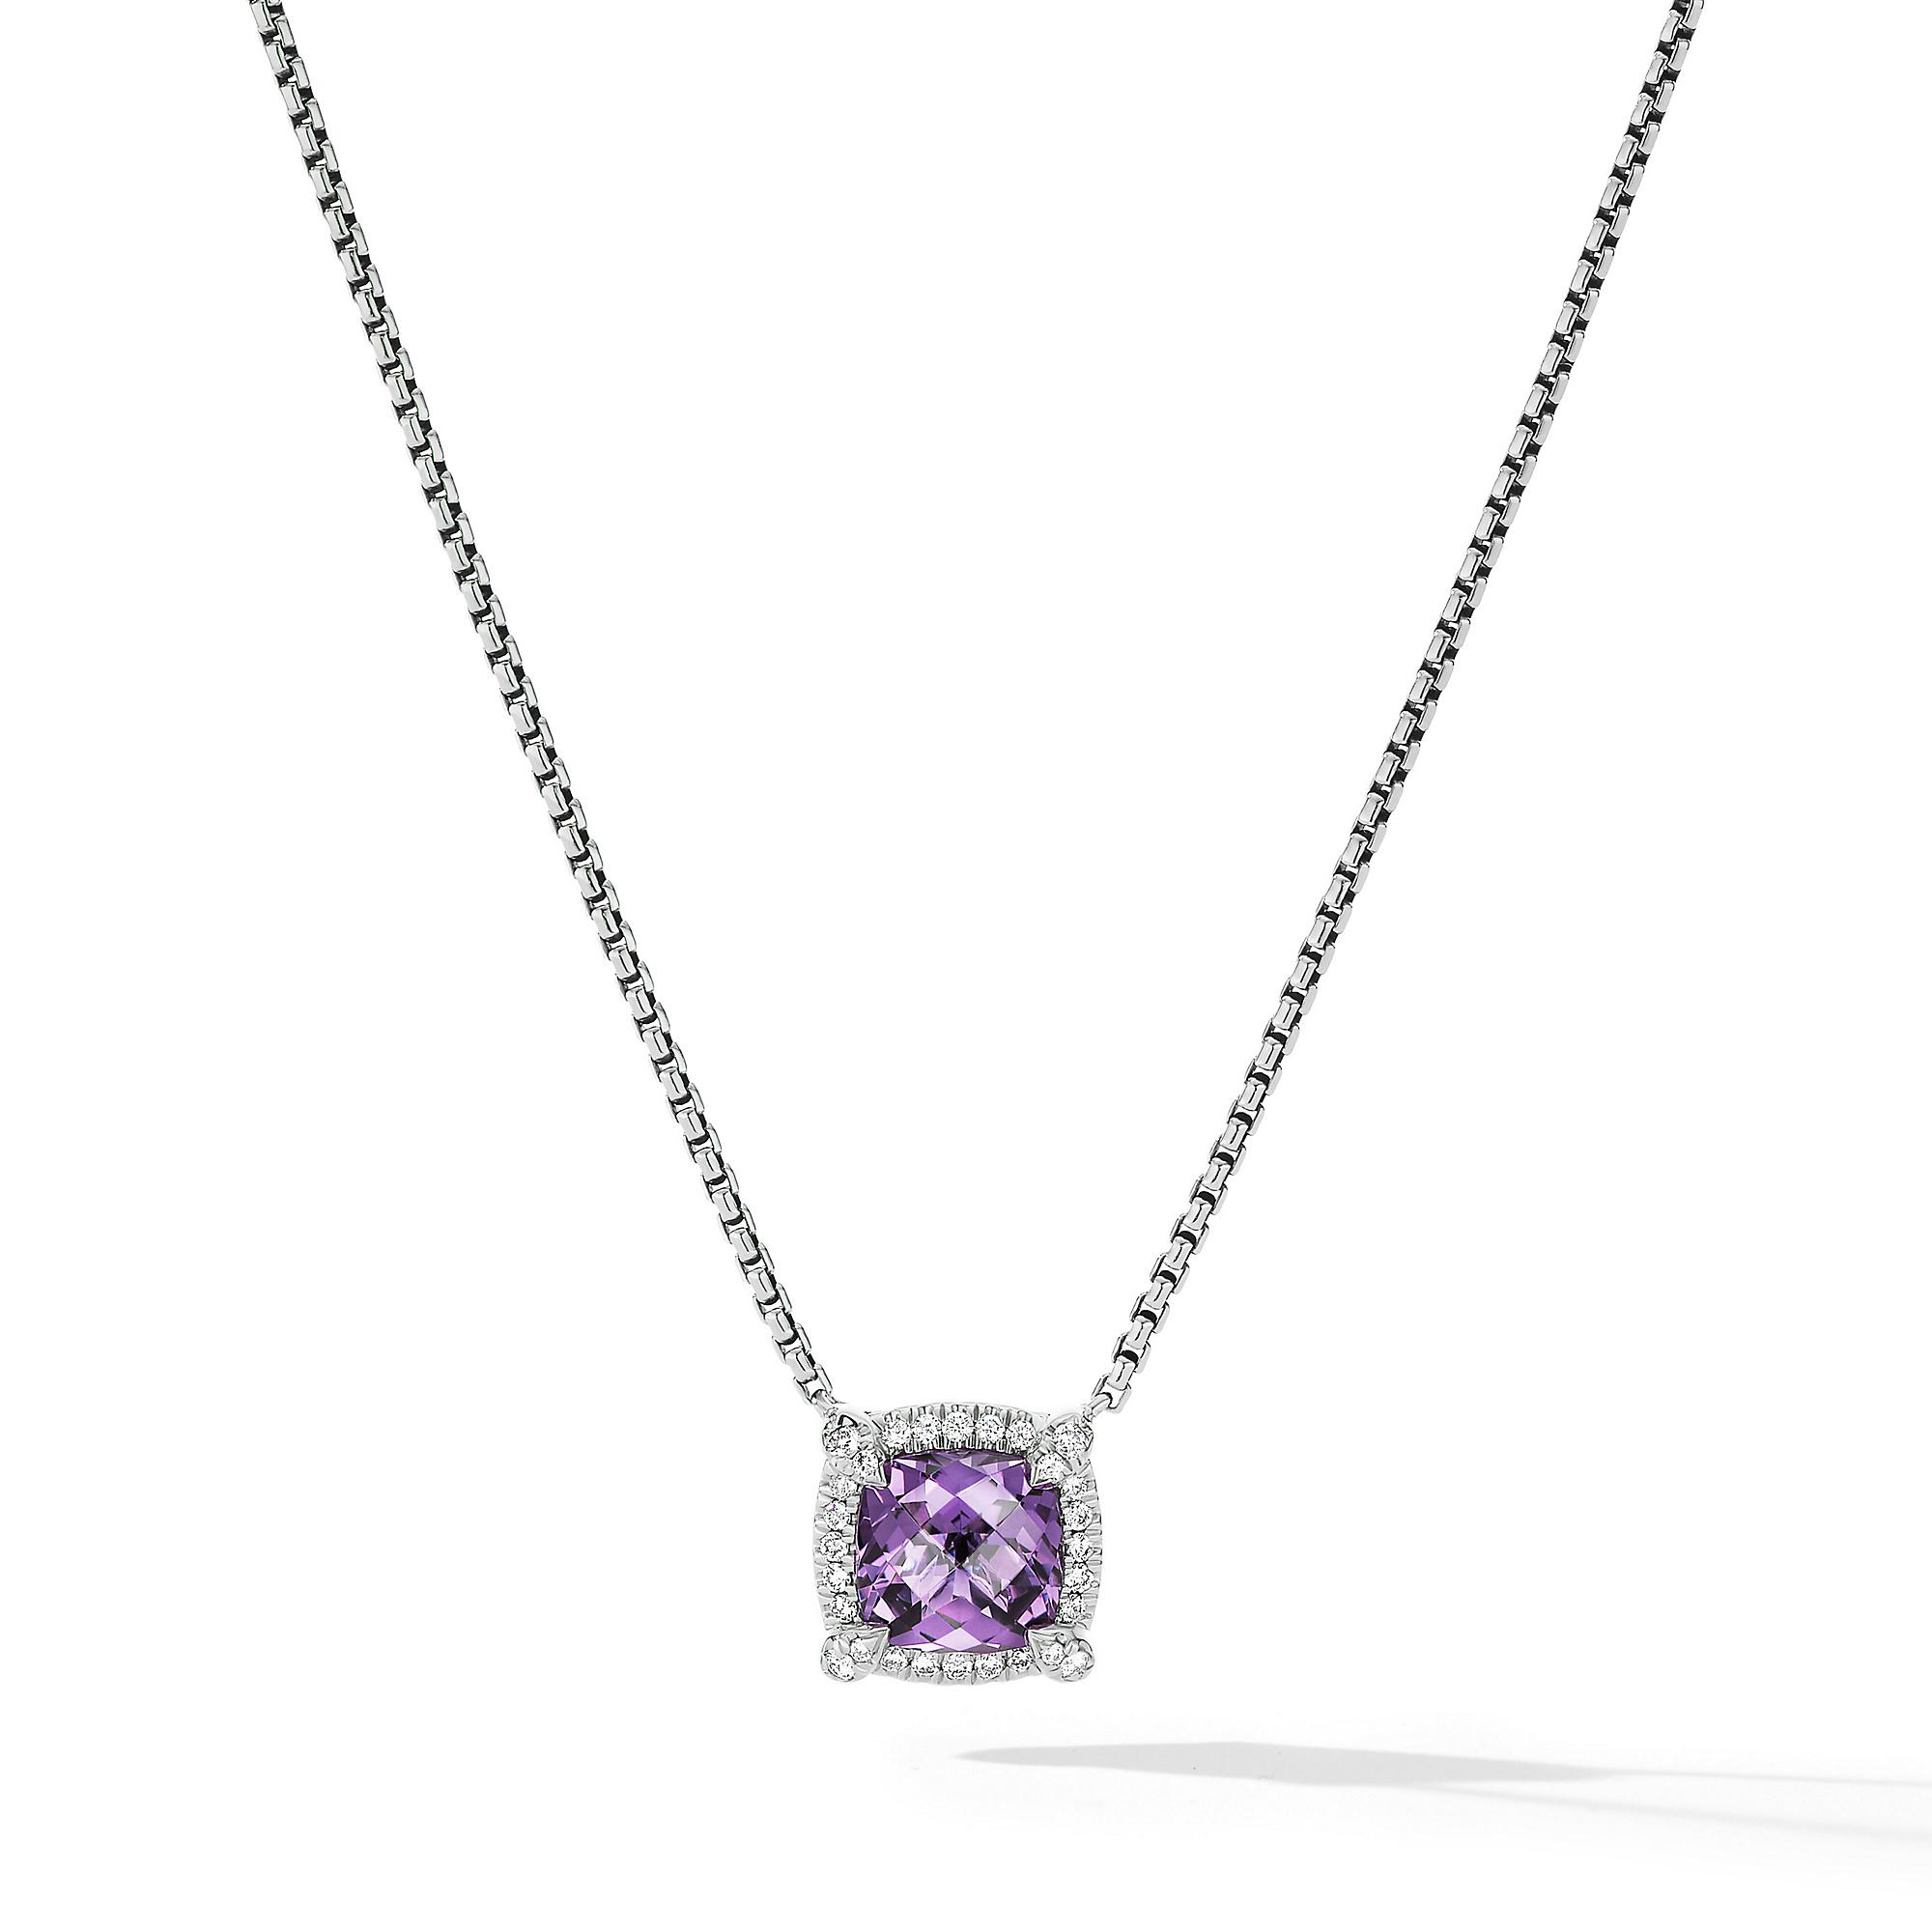 David Yurman Petite Chatelaine Pave Bezel Pendant Necklace with Amethyst and Diamonds